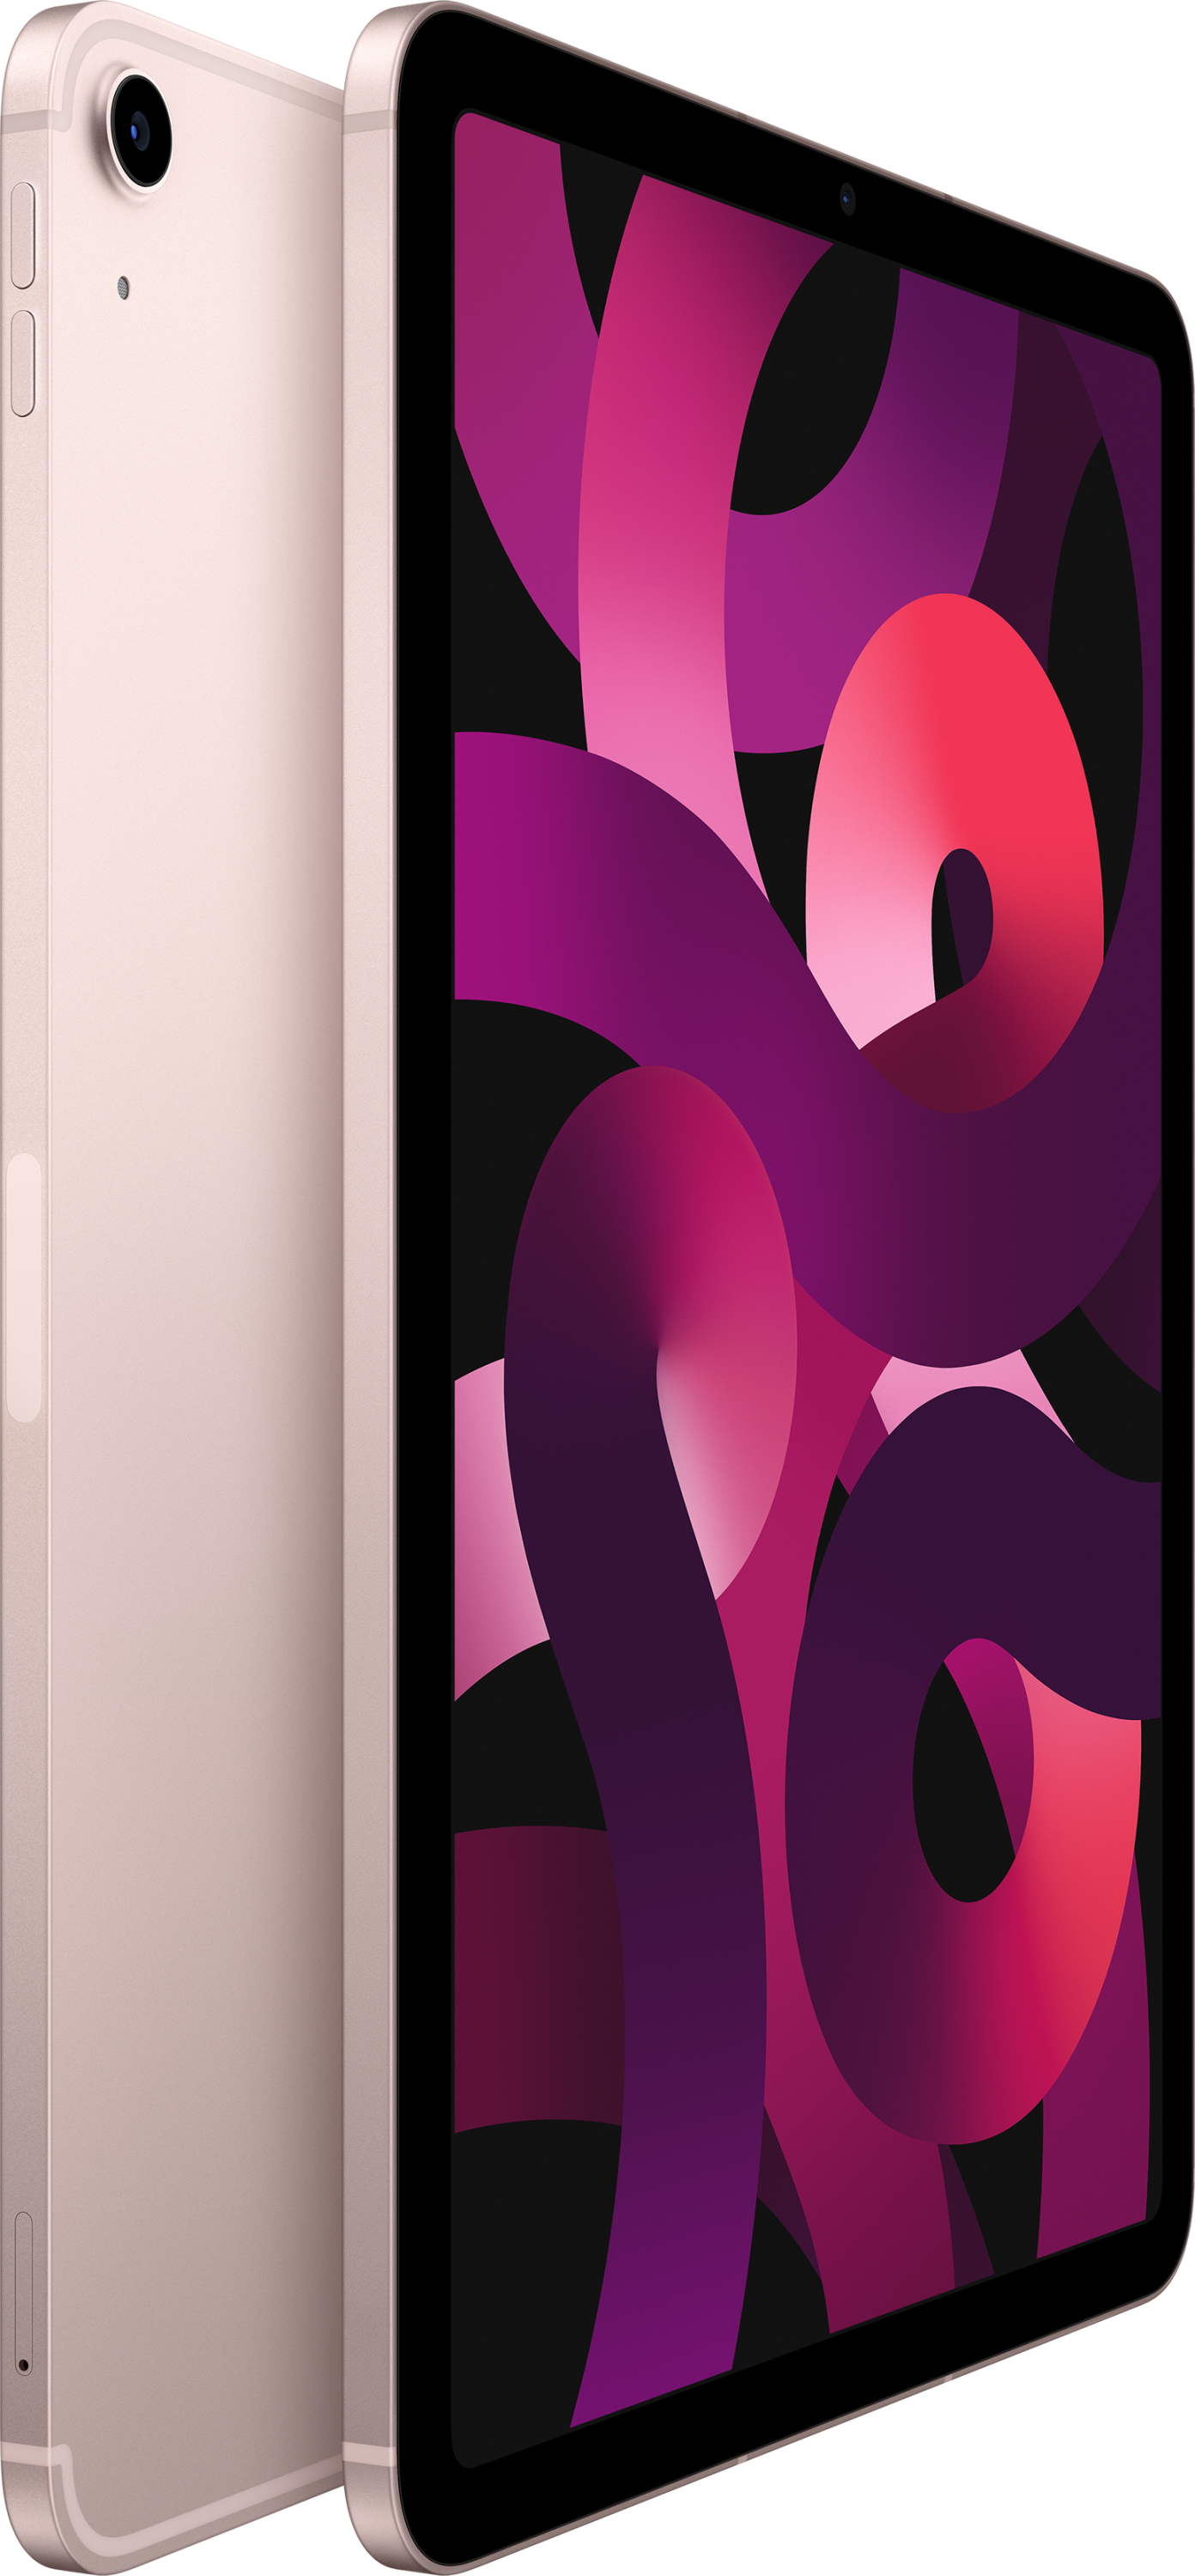 Apple iPad Mini 5 64GB 256GB All Colors Choose WiFi or Cellular - Used